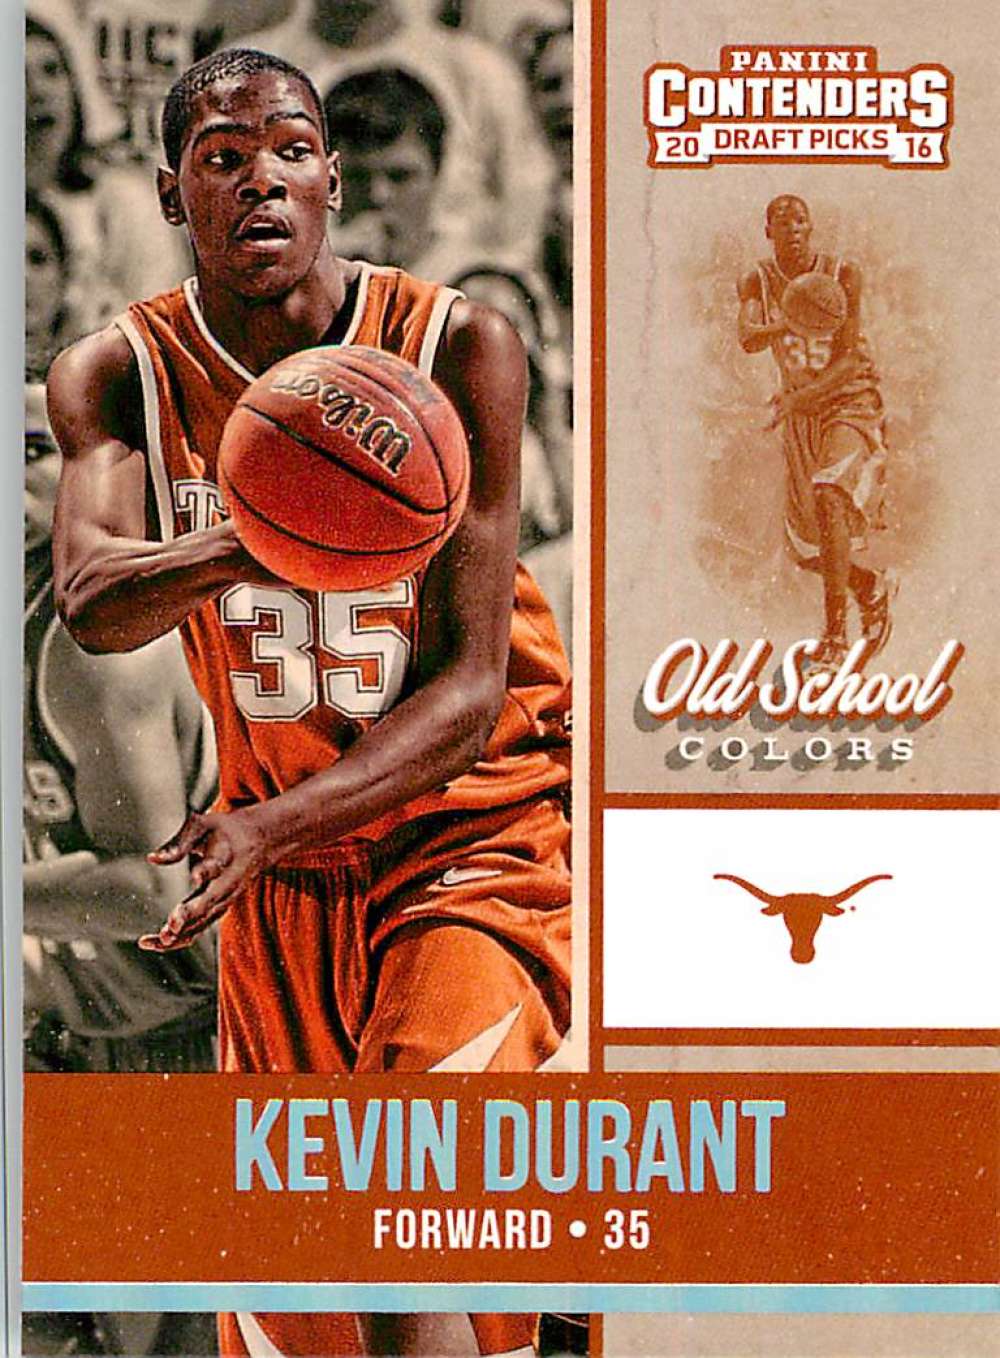 2016-17 Panini Contenders Draft Picks Old School Colors Basketball #13 Kevin Durant Texas Longhorns 